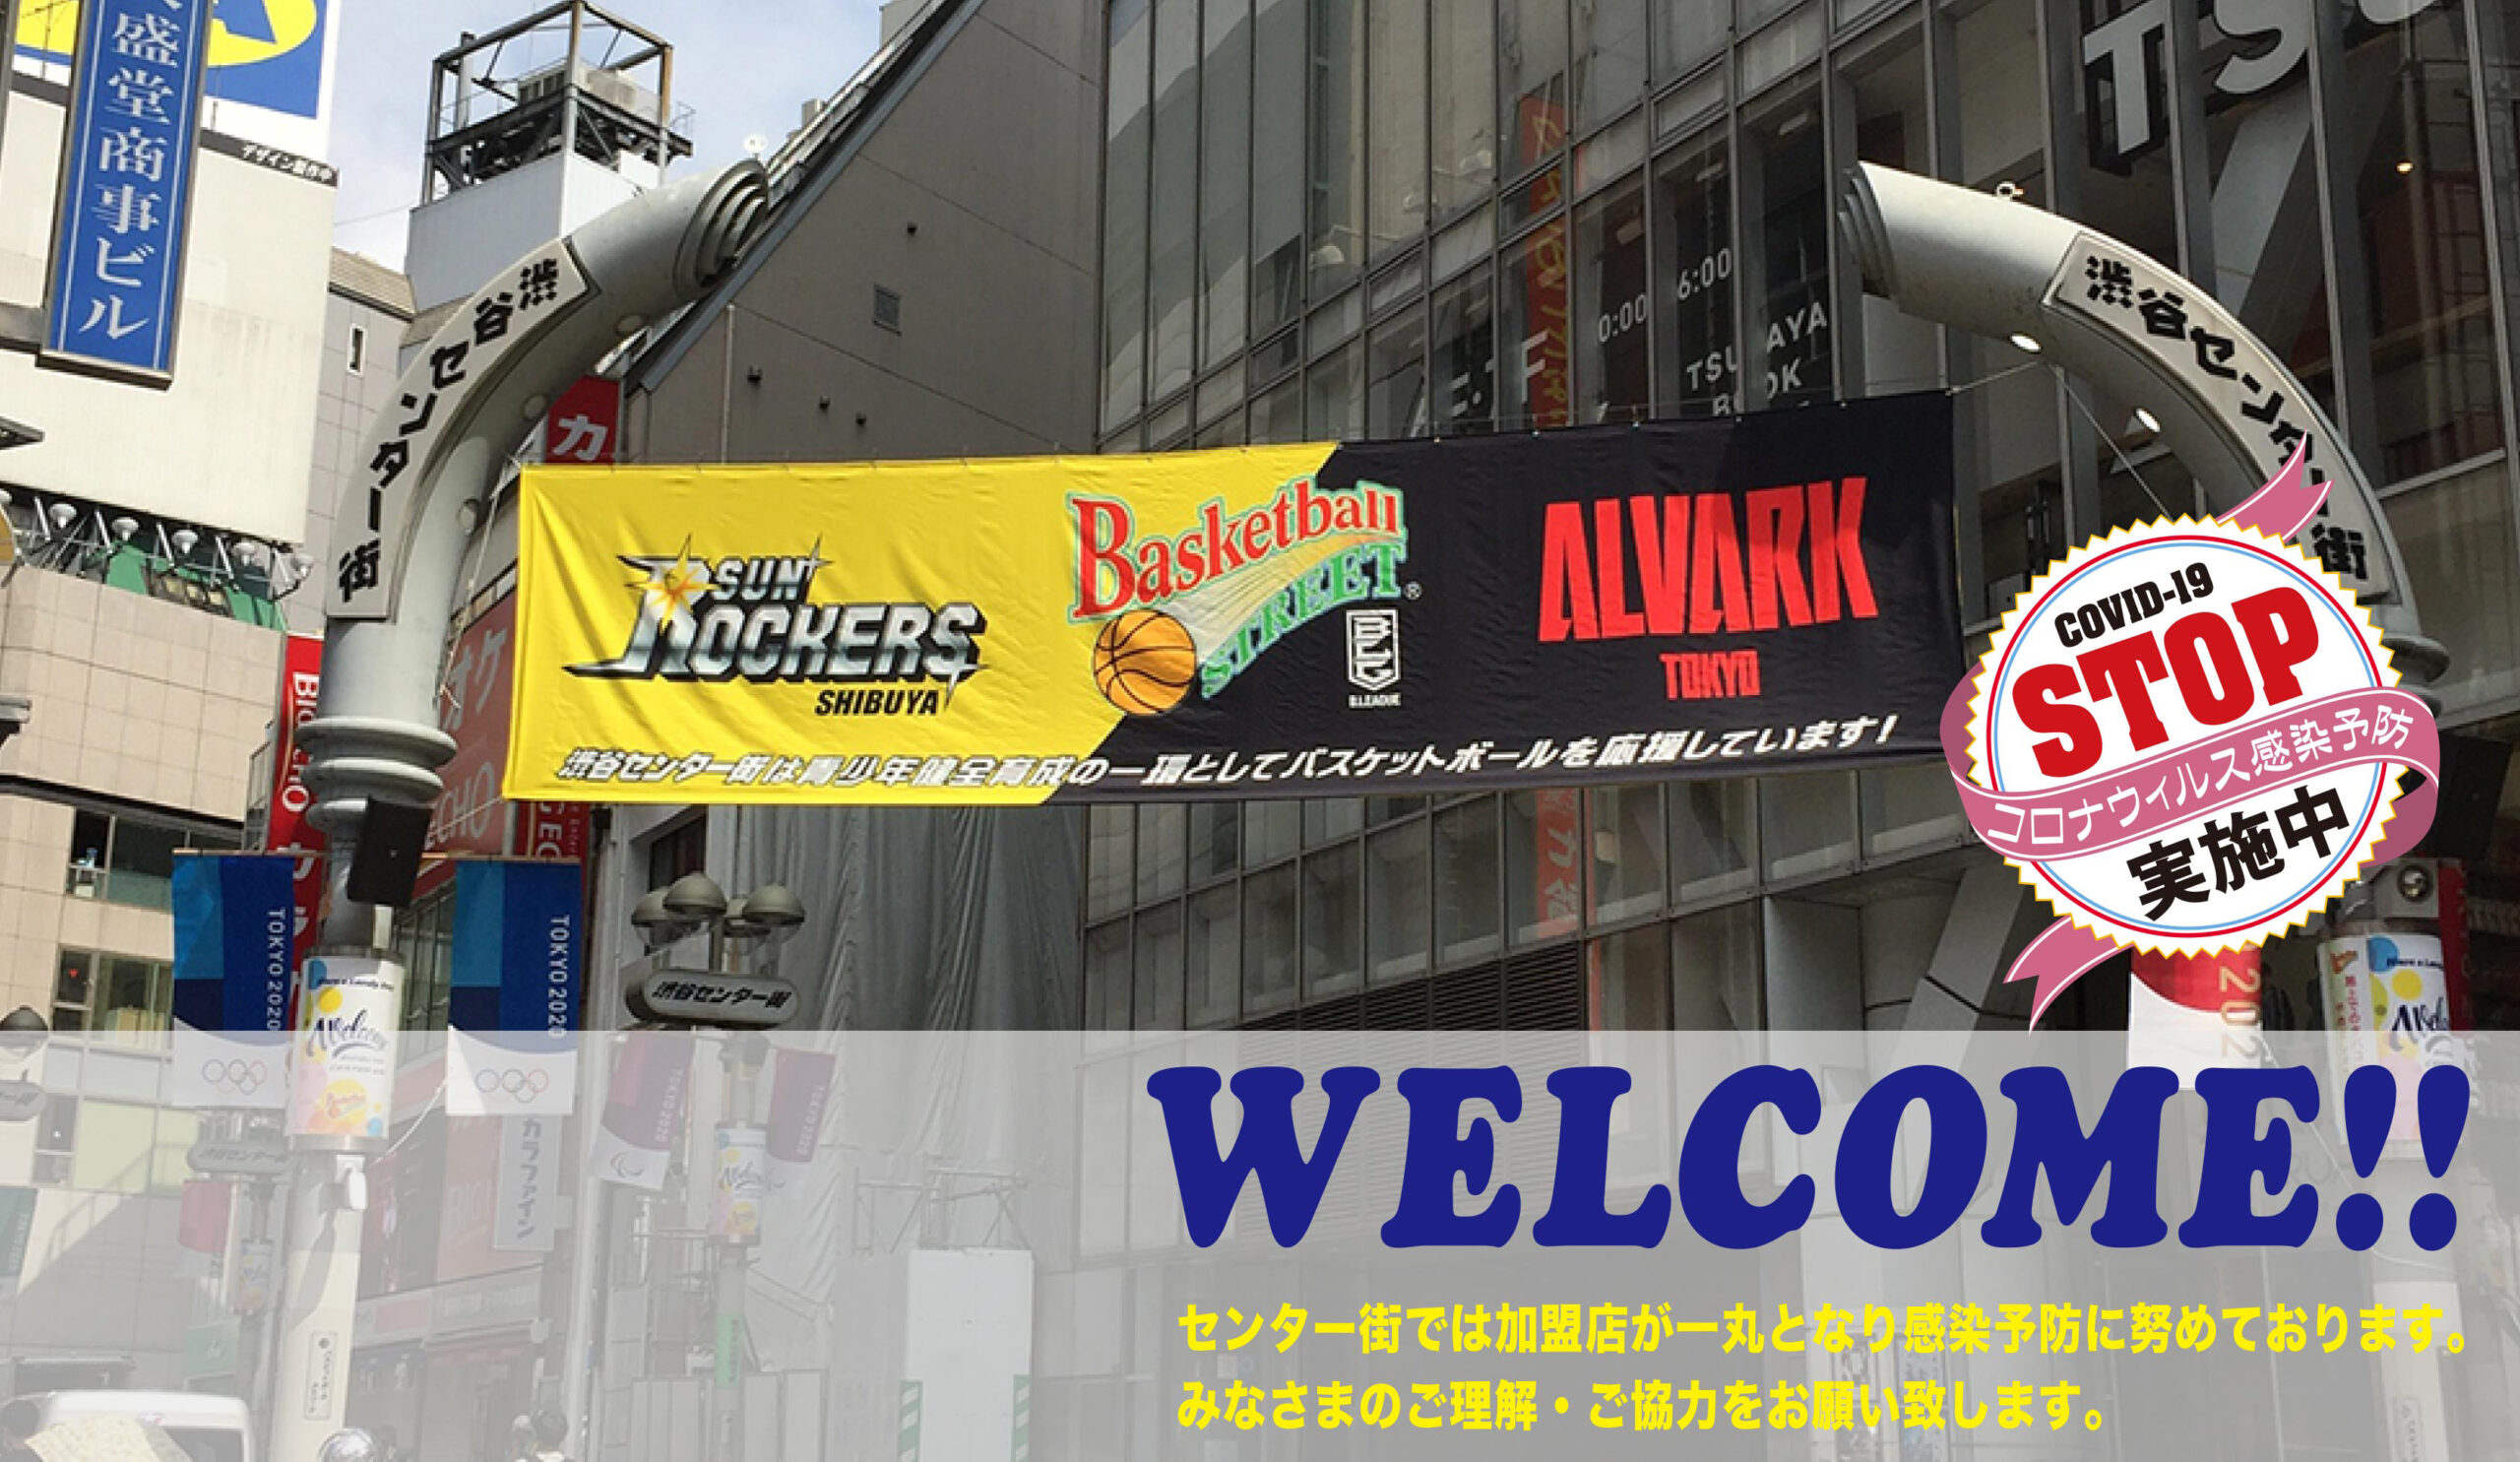 Welcome 渋谷センター街 渋谷センター街